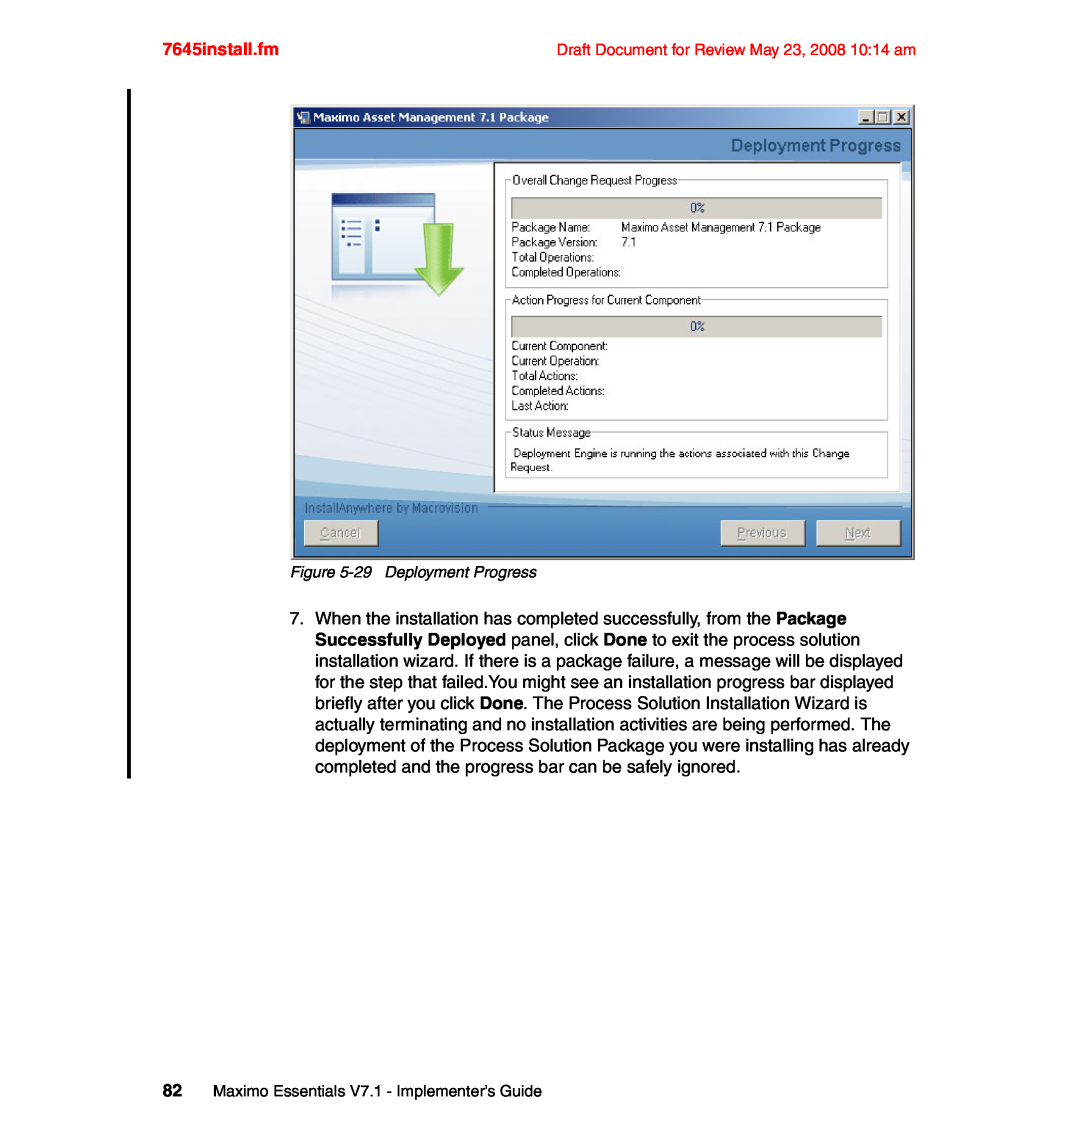 IBM SG24-7645-00 manual 7645install.fm, 29Deployment Progress, 82Maximo Essentials V7.1 - Implementer’s Guide 